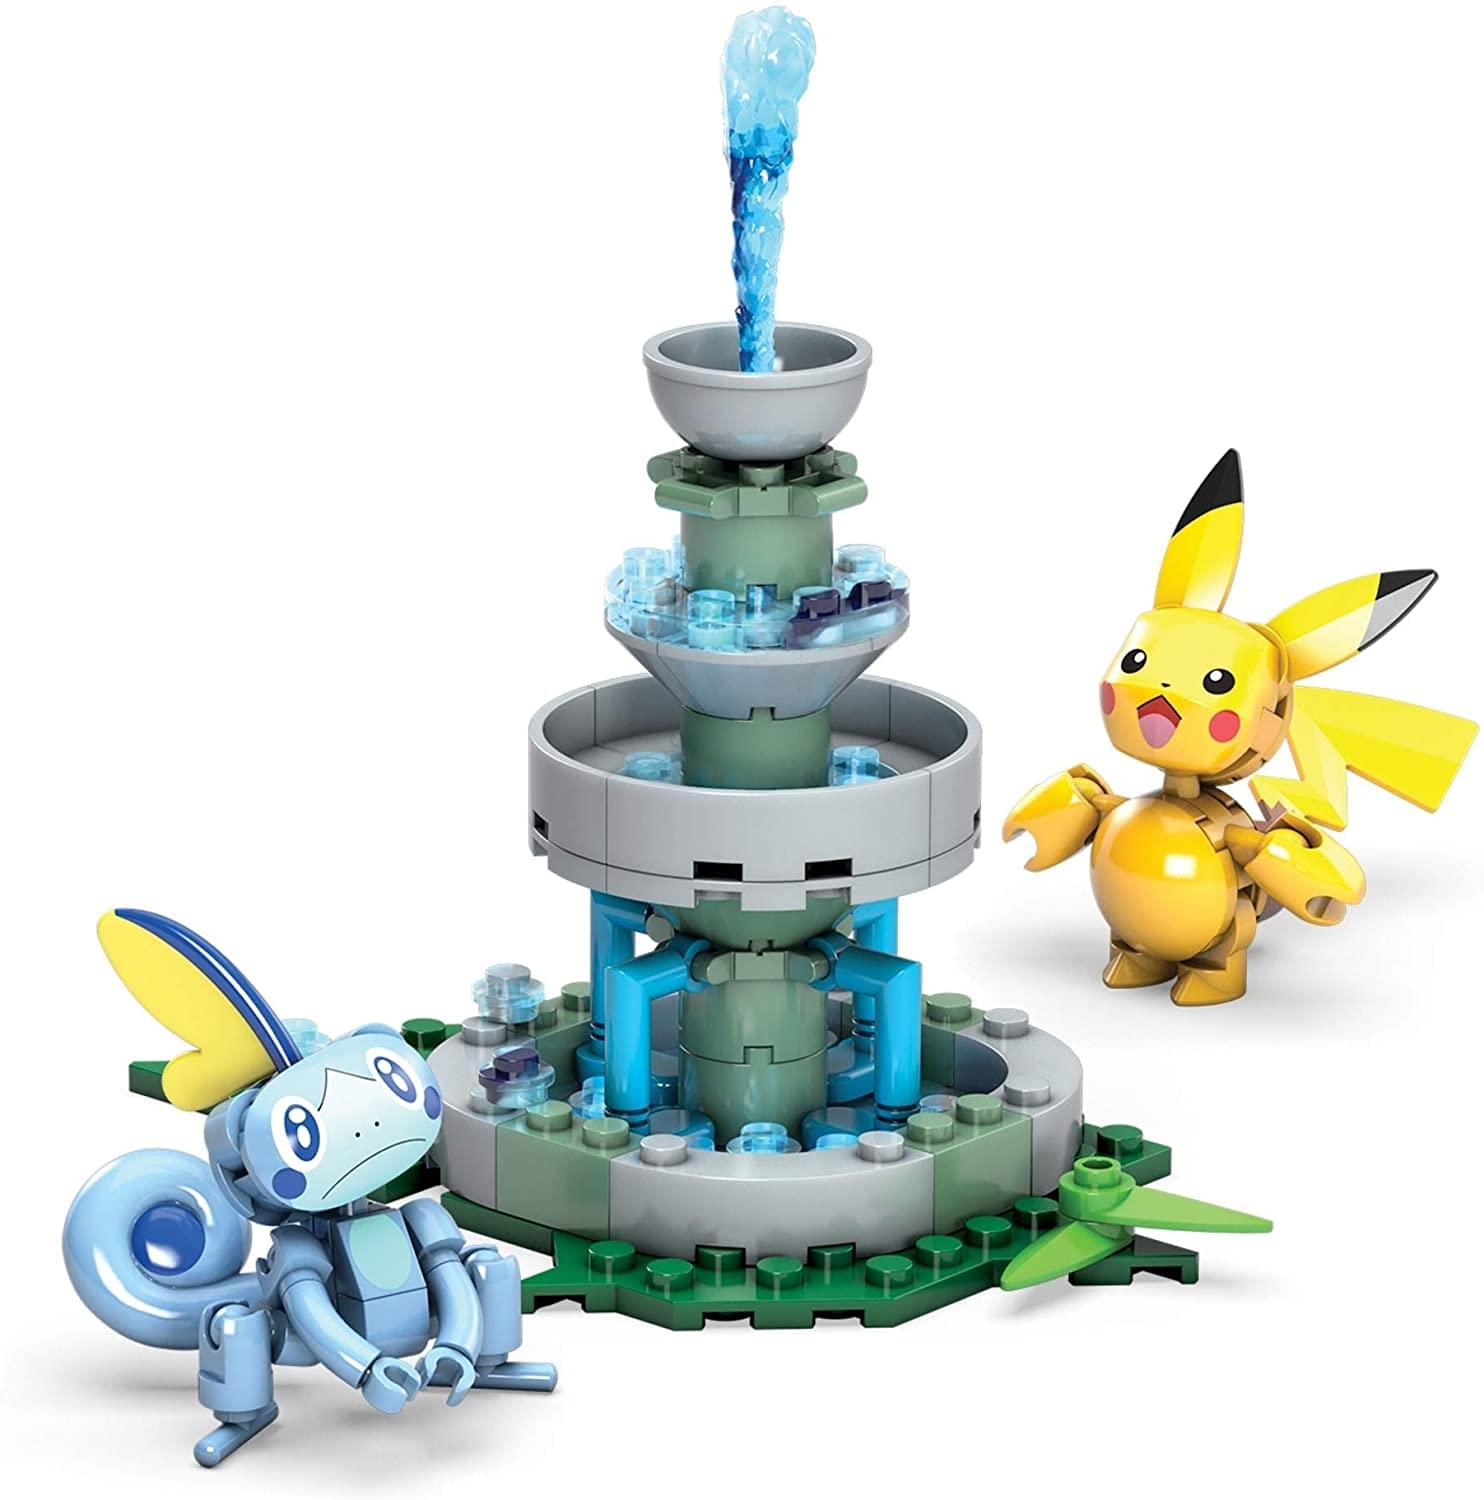 Pokemon Mega Construx 124 Piece Building Set | Pikachu vs Sobble